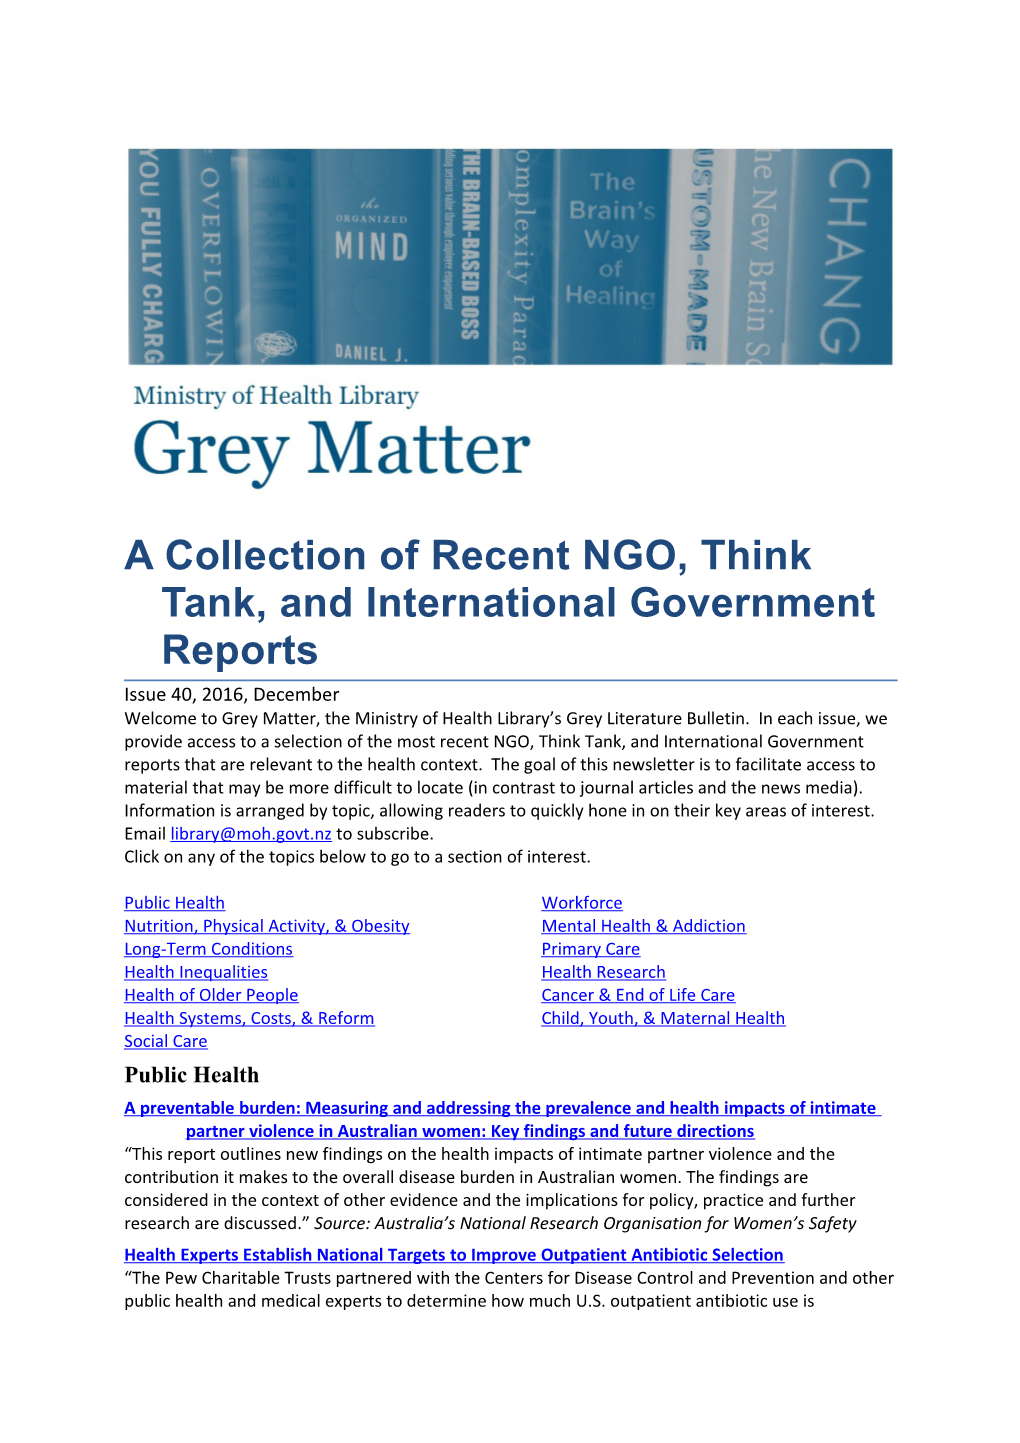 Grey Matter, Issue 40, December 2016